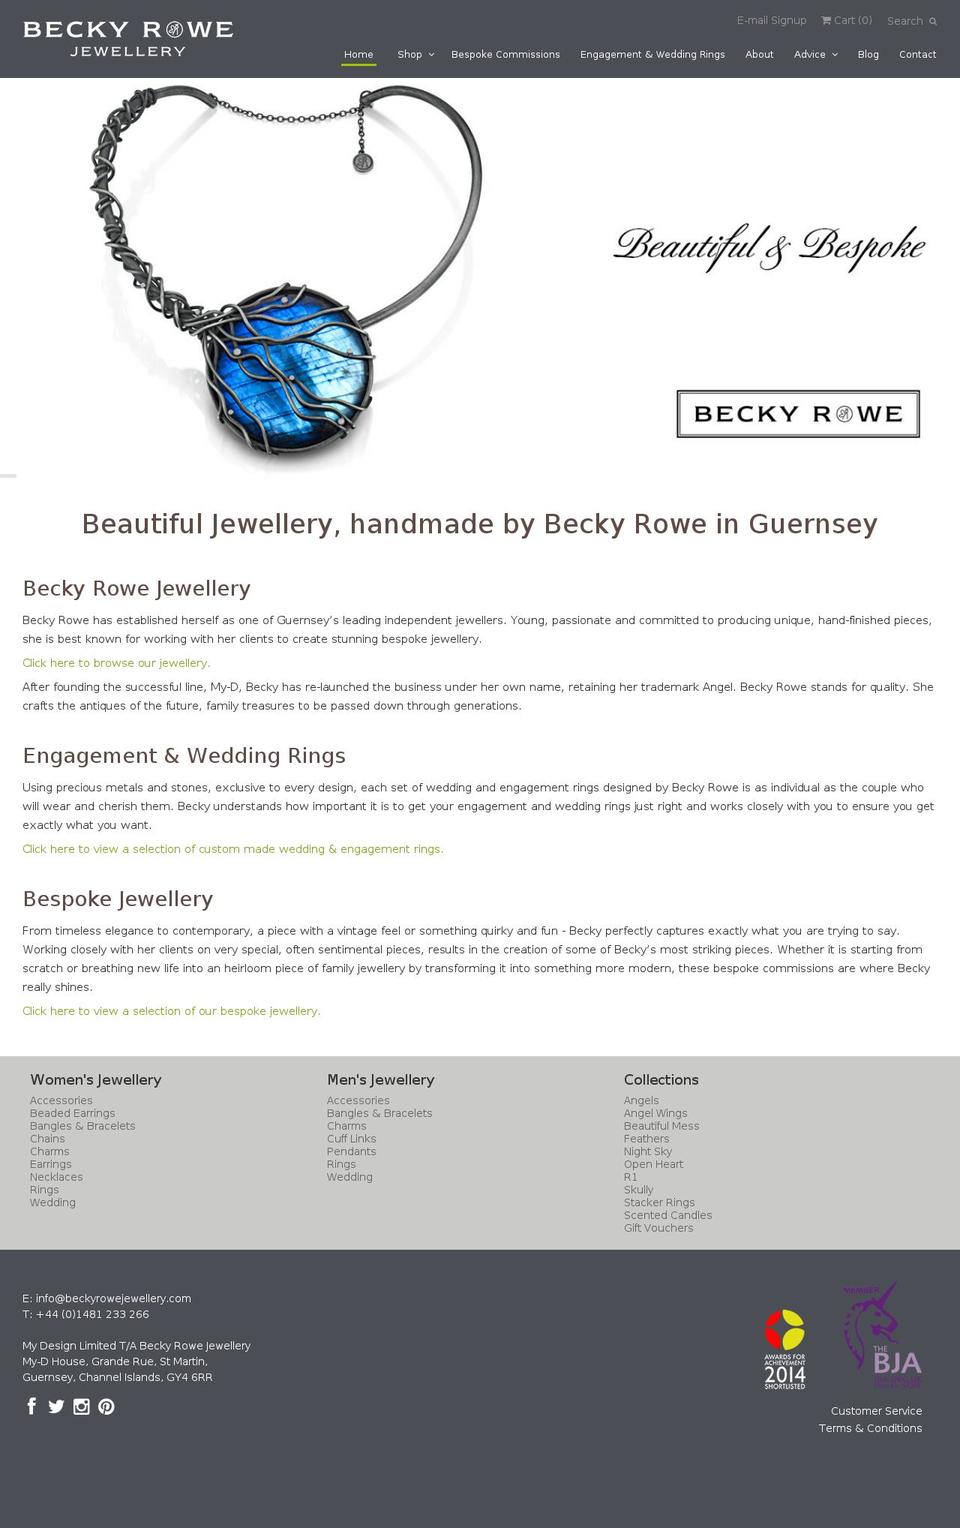 beckyrowejewellery.com shopify website screenshot